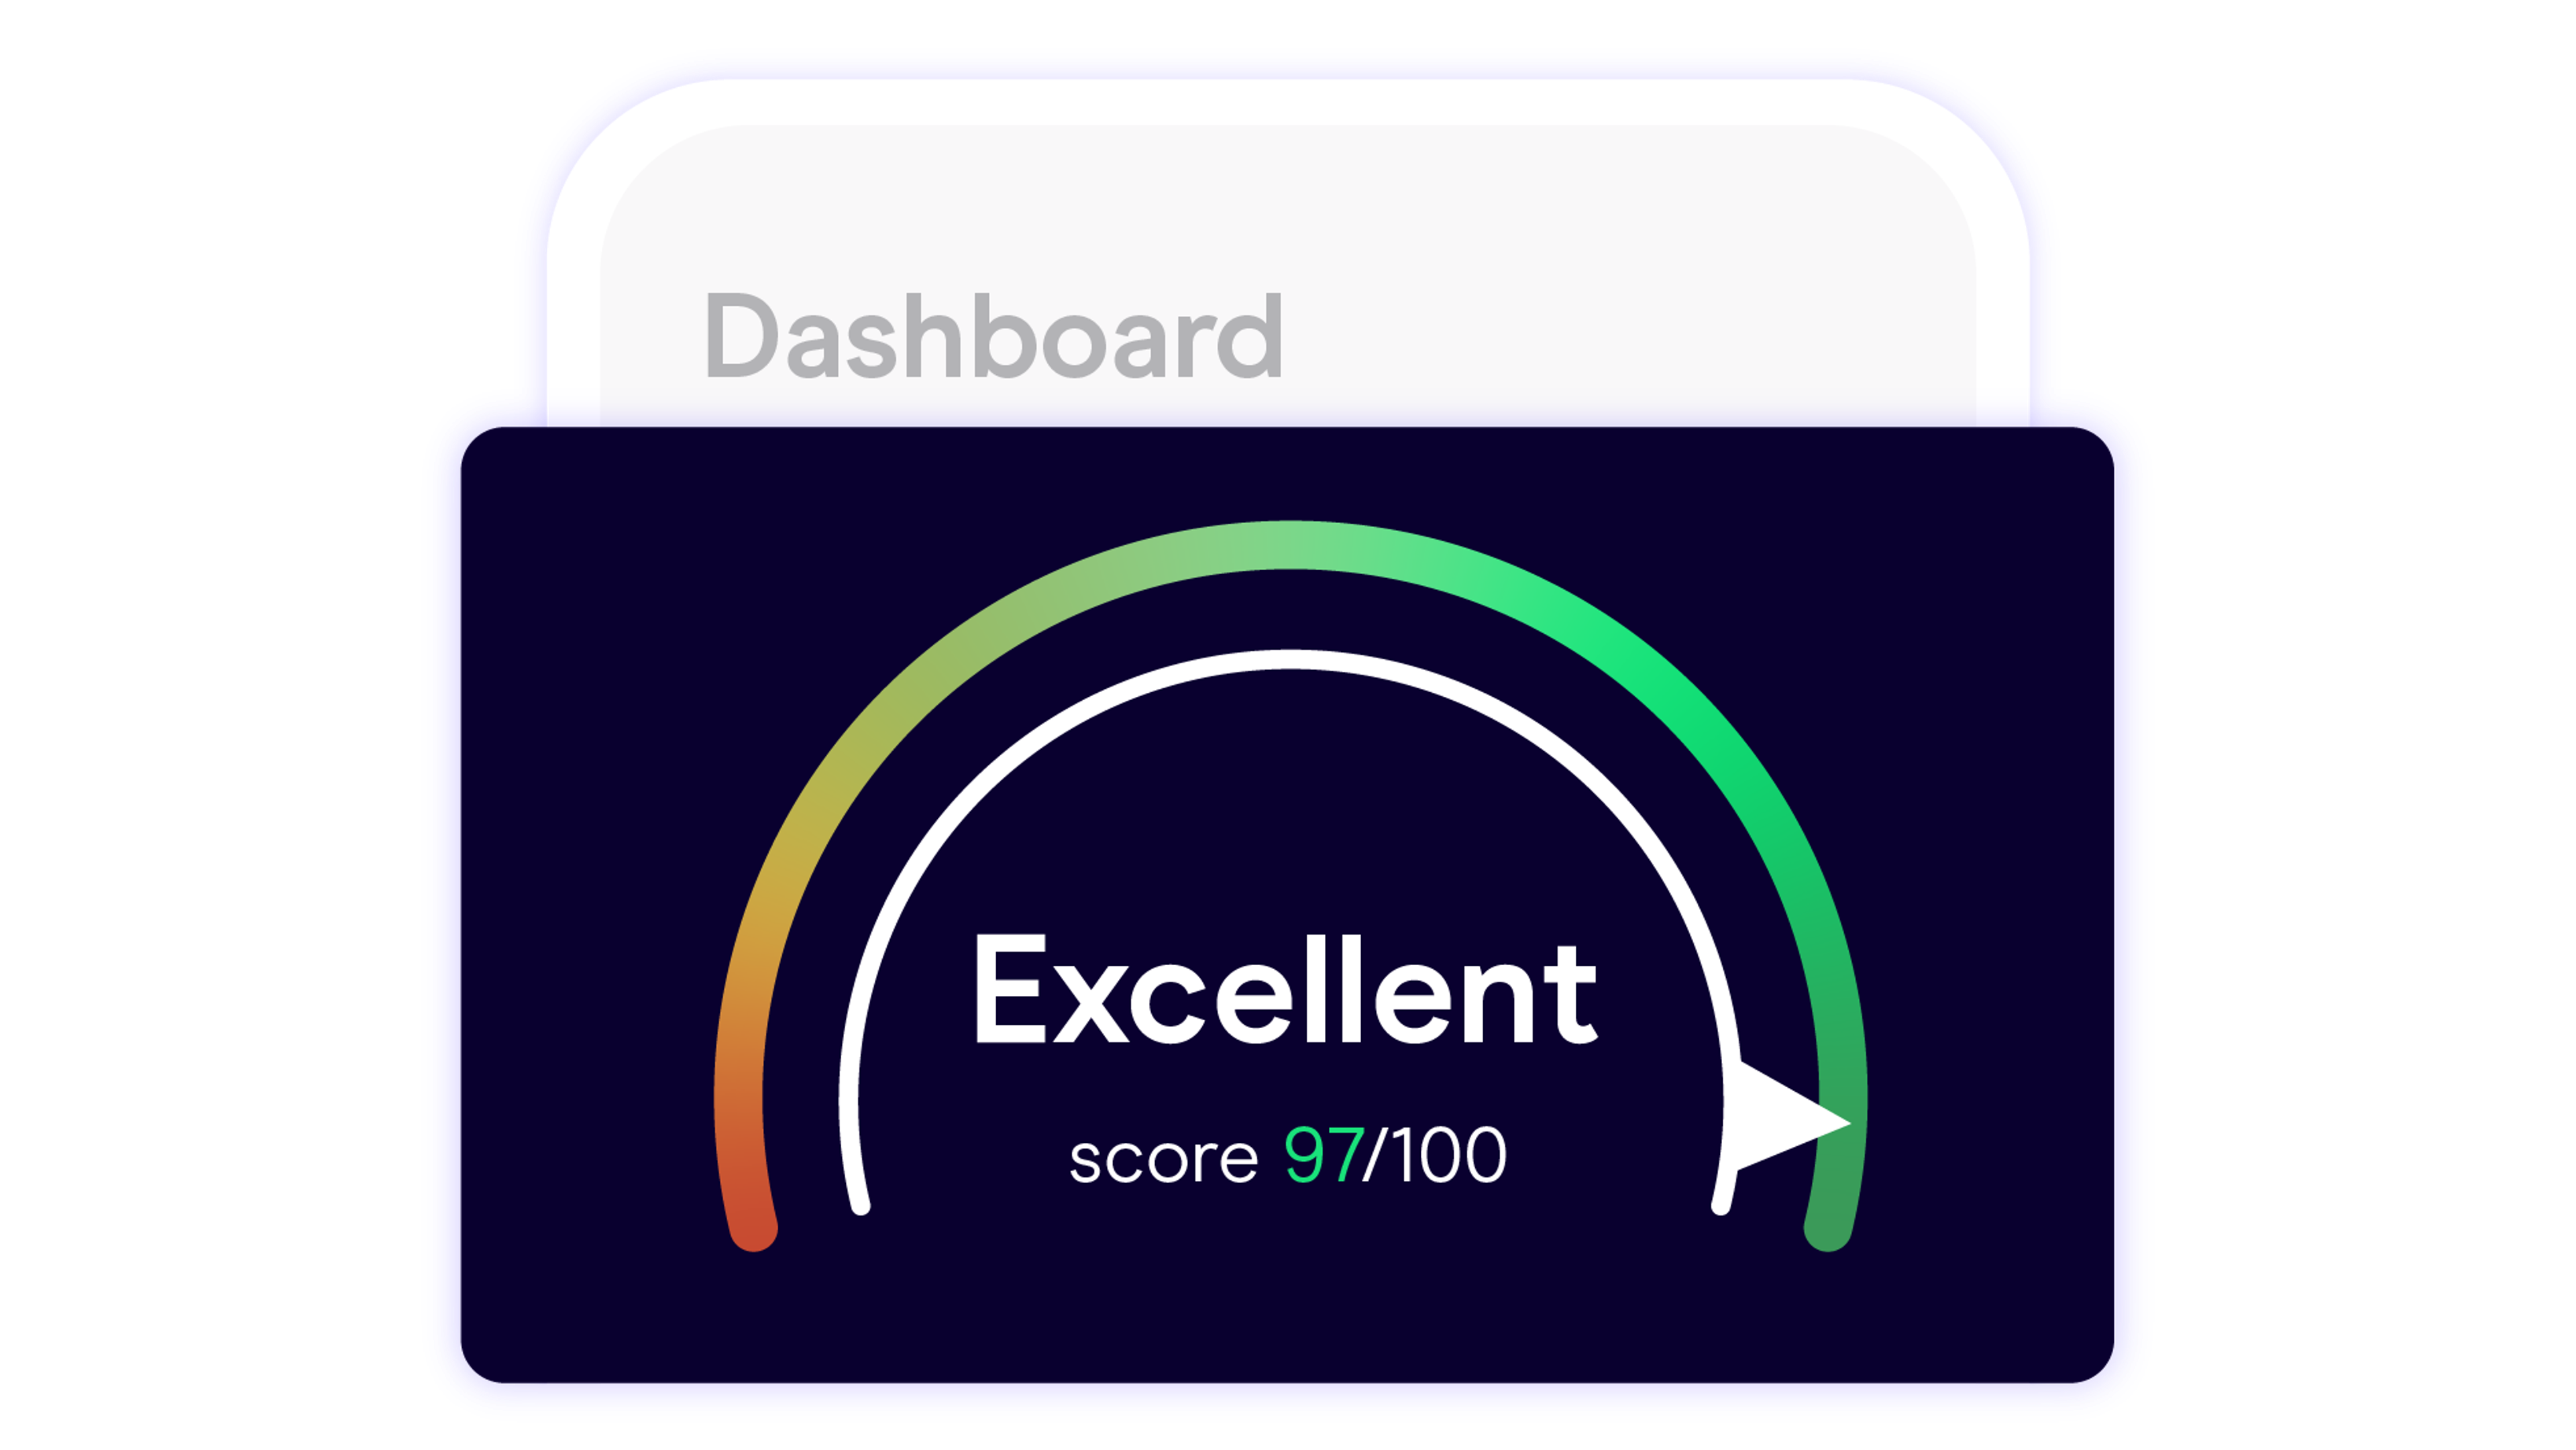 Zego Sense app dashboard showing driver score as excellent